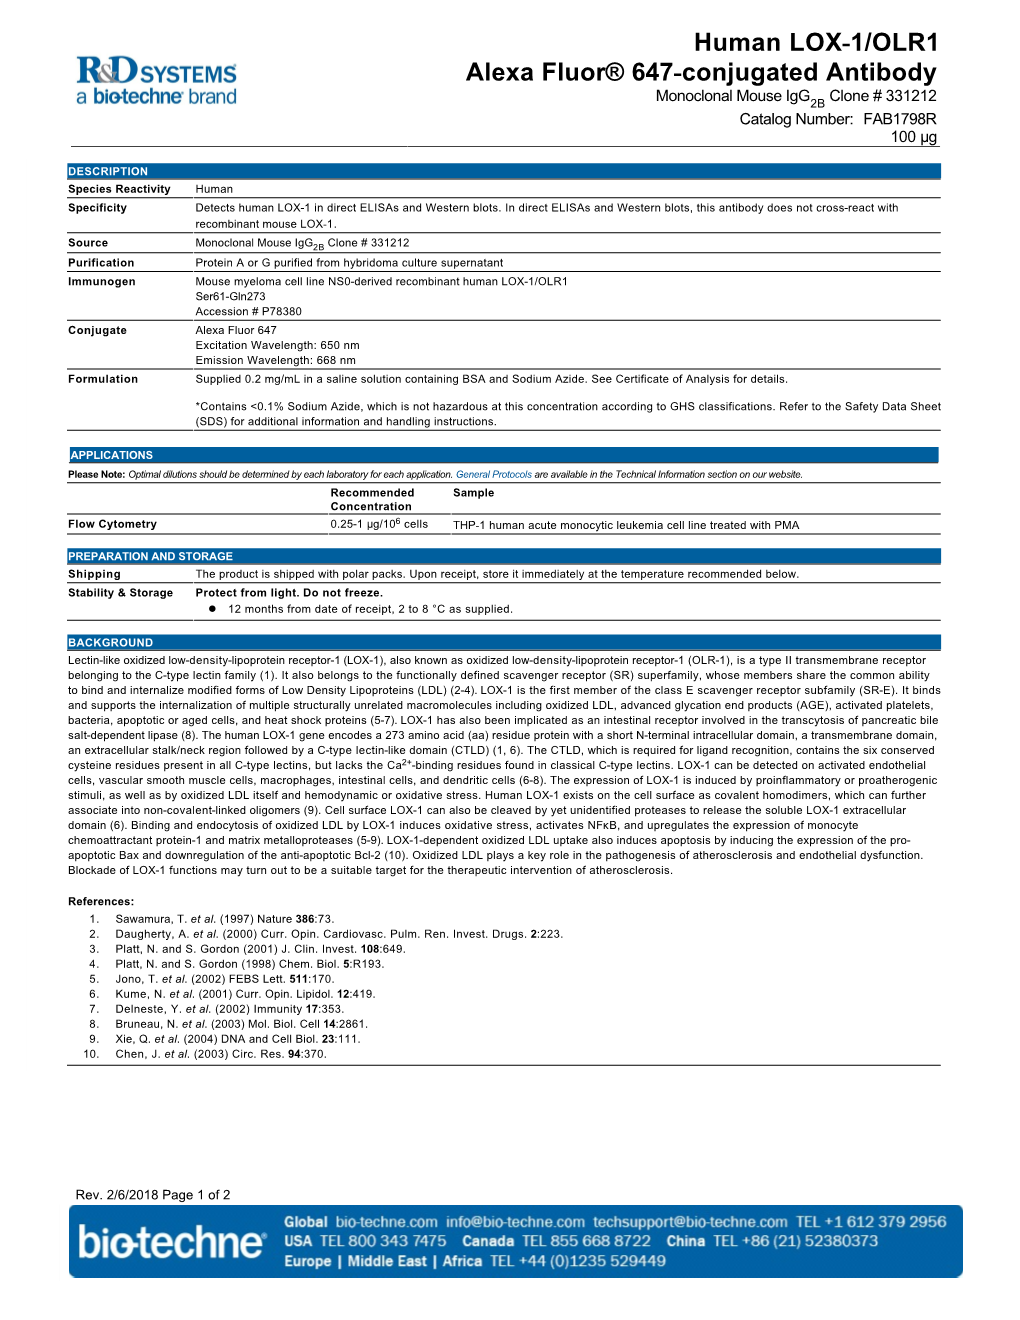 Human LOX-1/OLR1 Alexa Fluor® 647-Conjugated Antibody